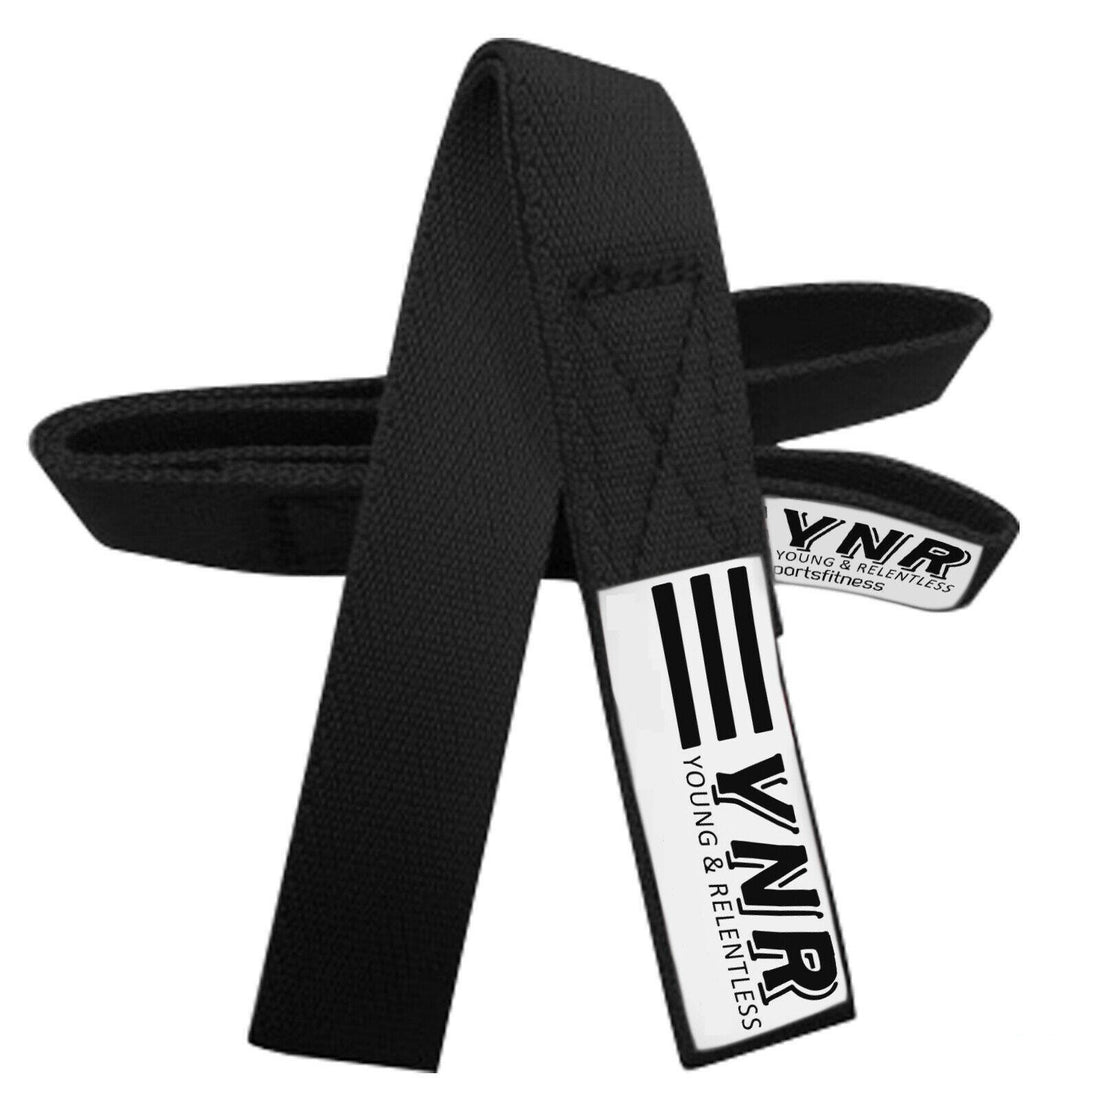 YNR Premium Gymnastic Bar Loops Straps | Hand Grip Protection | YNR Sports Fitness